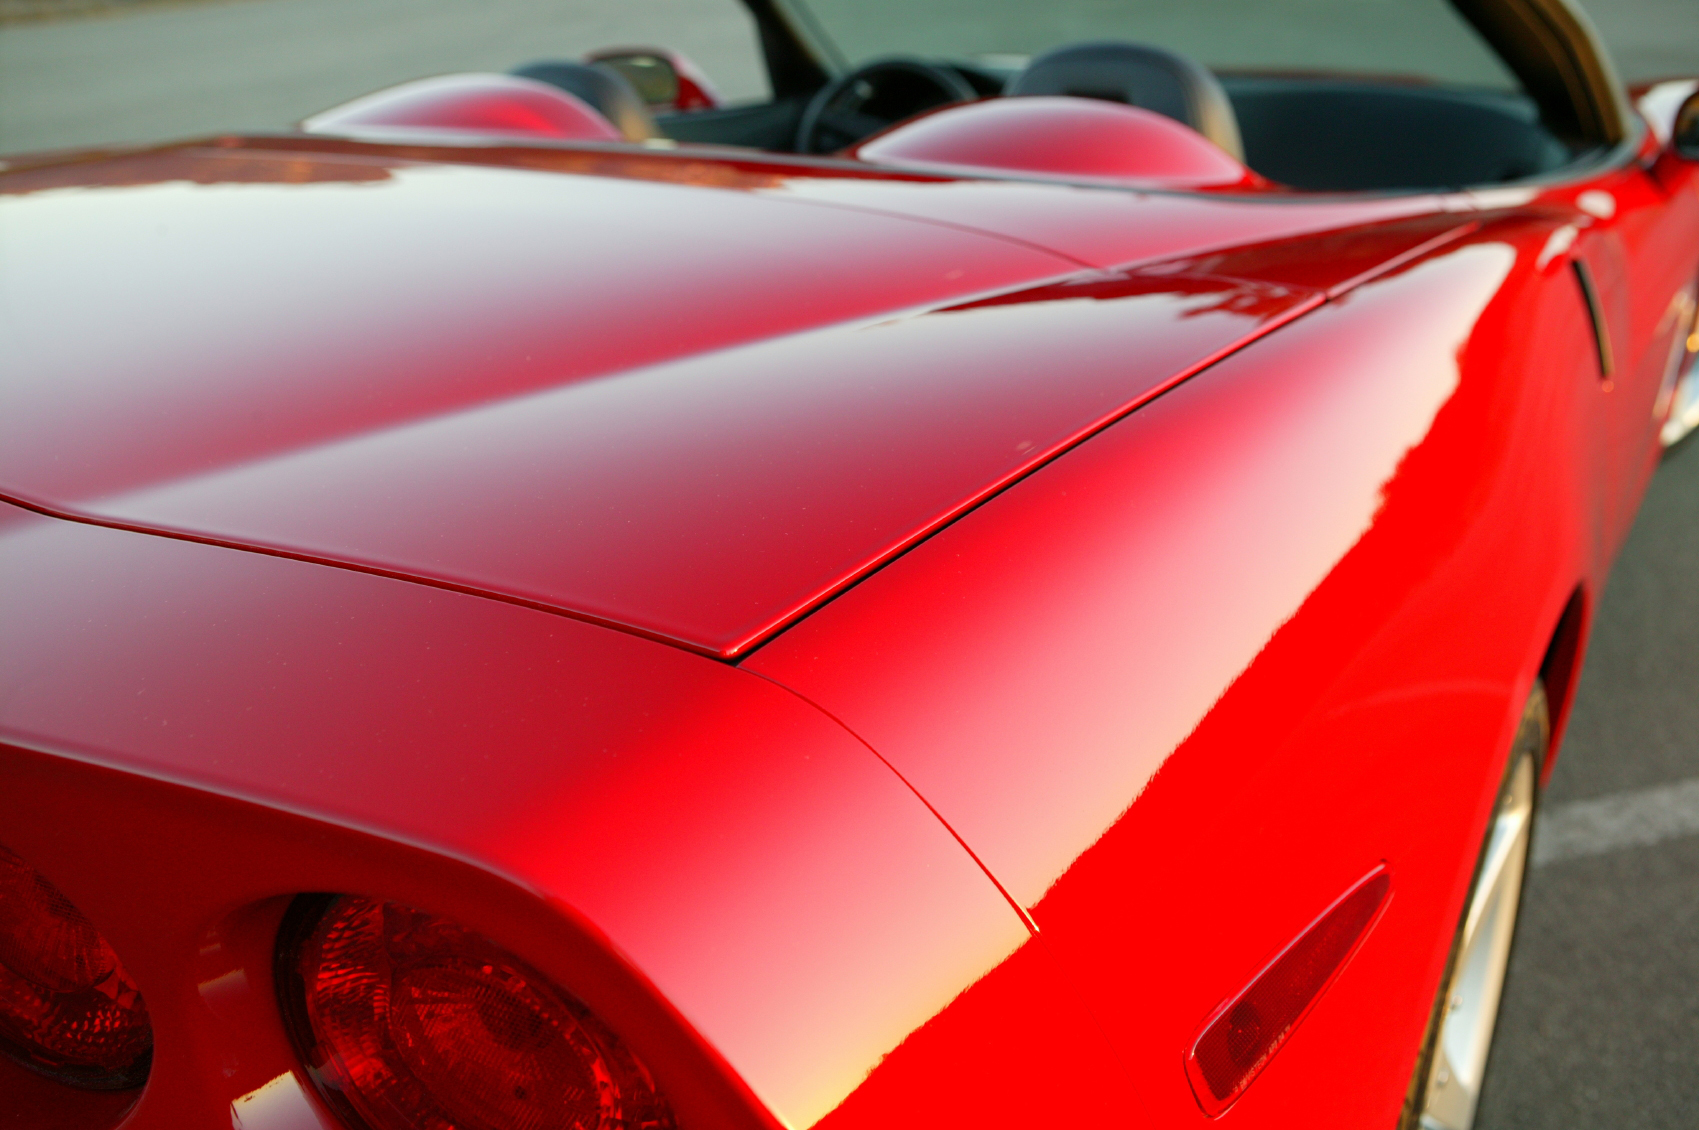 national Red Corvette Museum